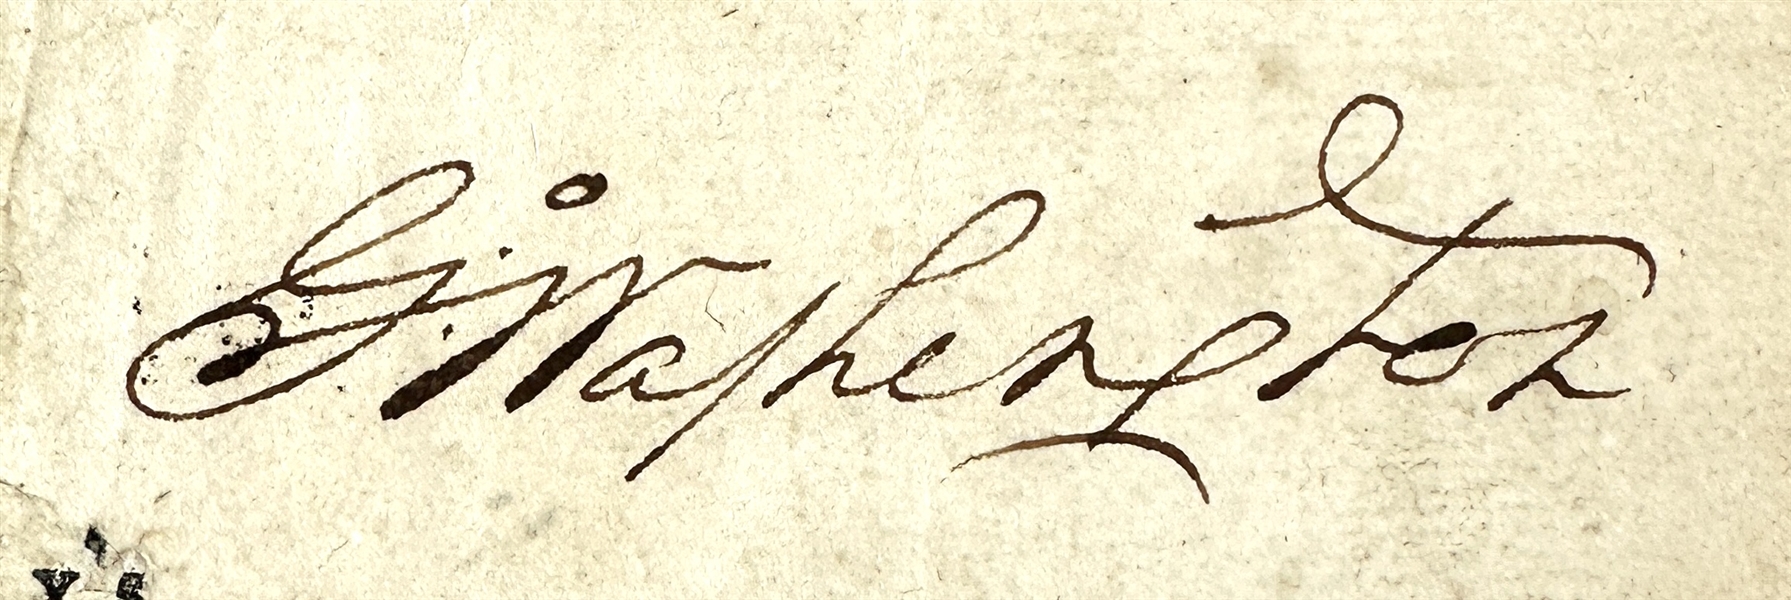 President George Washington Signed Revolutionary War Discharge with Exceptionally Bold Signature (JSA LOA & University Archives LOA)